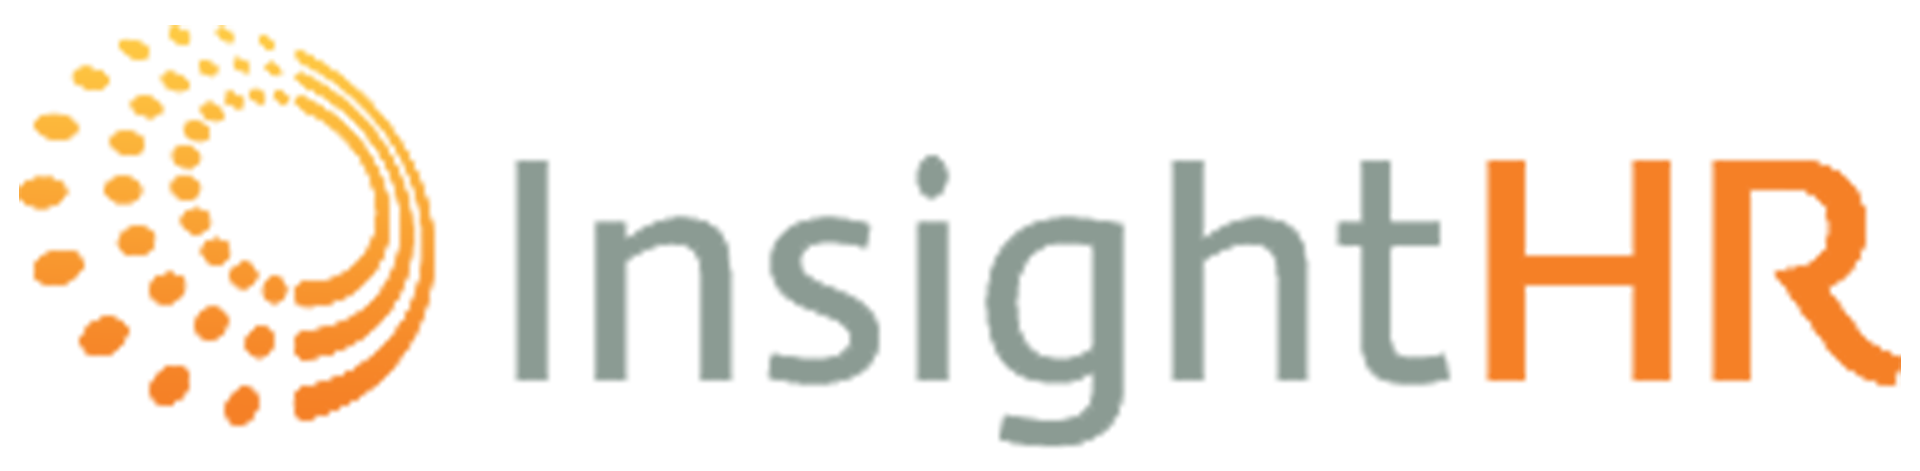 Insight HR